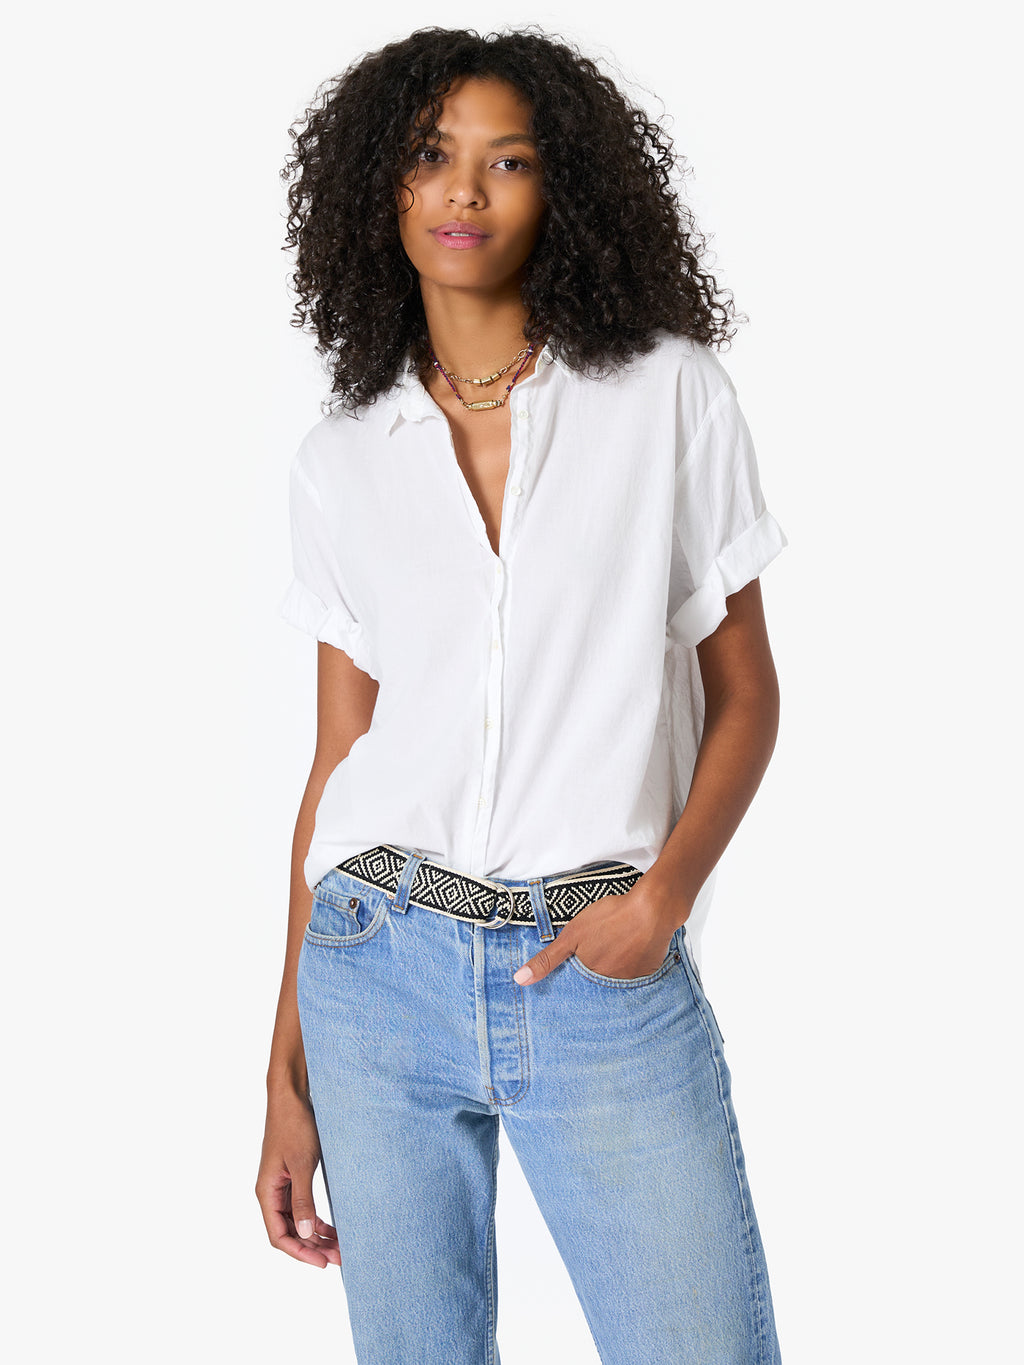 XÍRENA Channing Short Sleeve Shirt White | TNT The New Trend